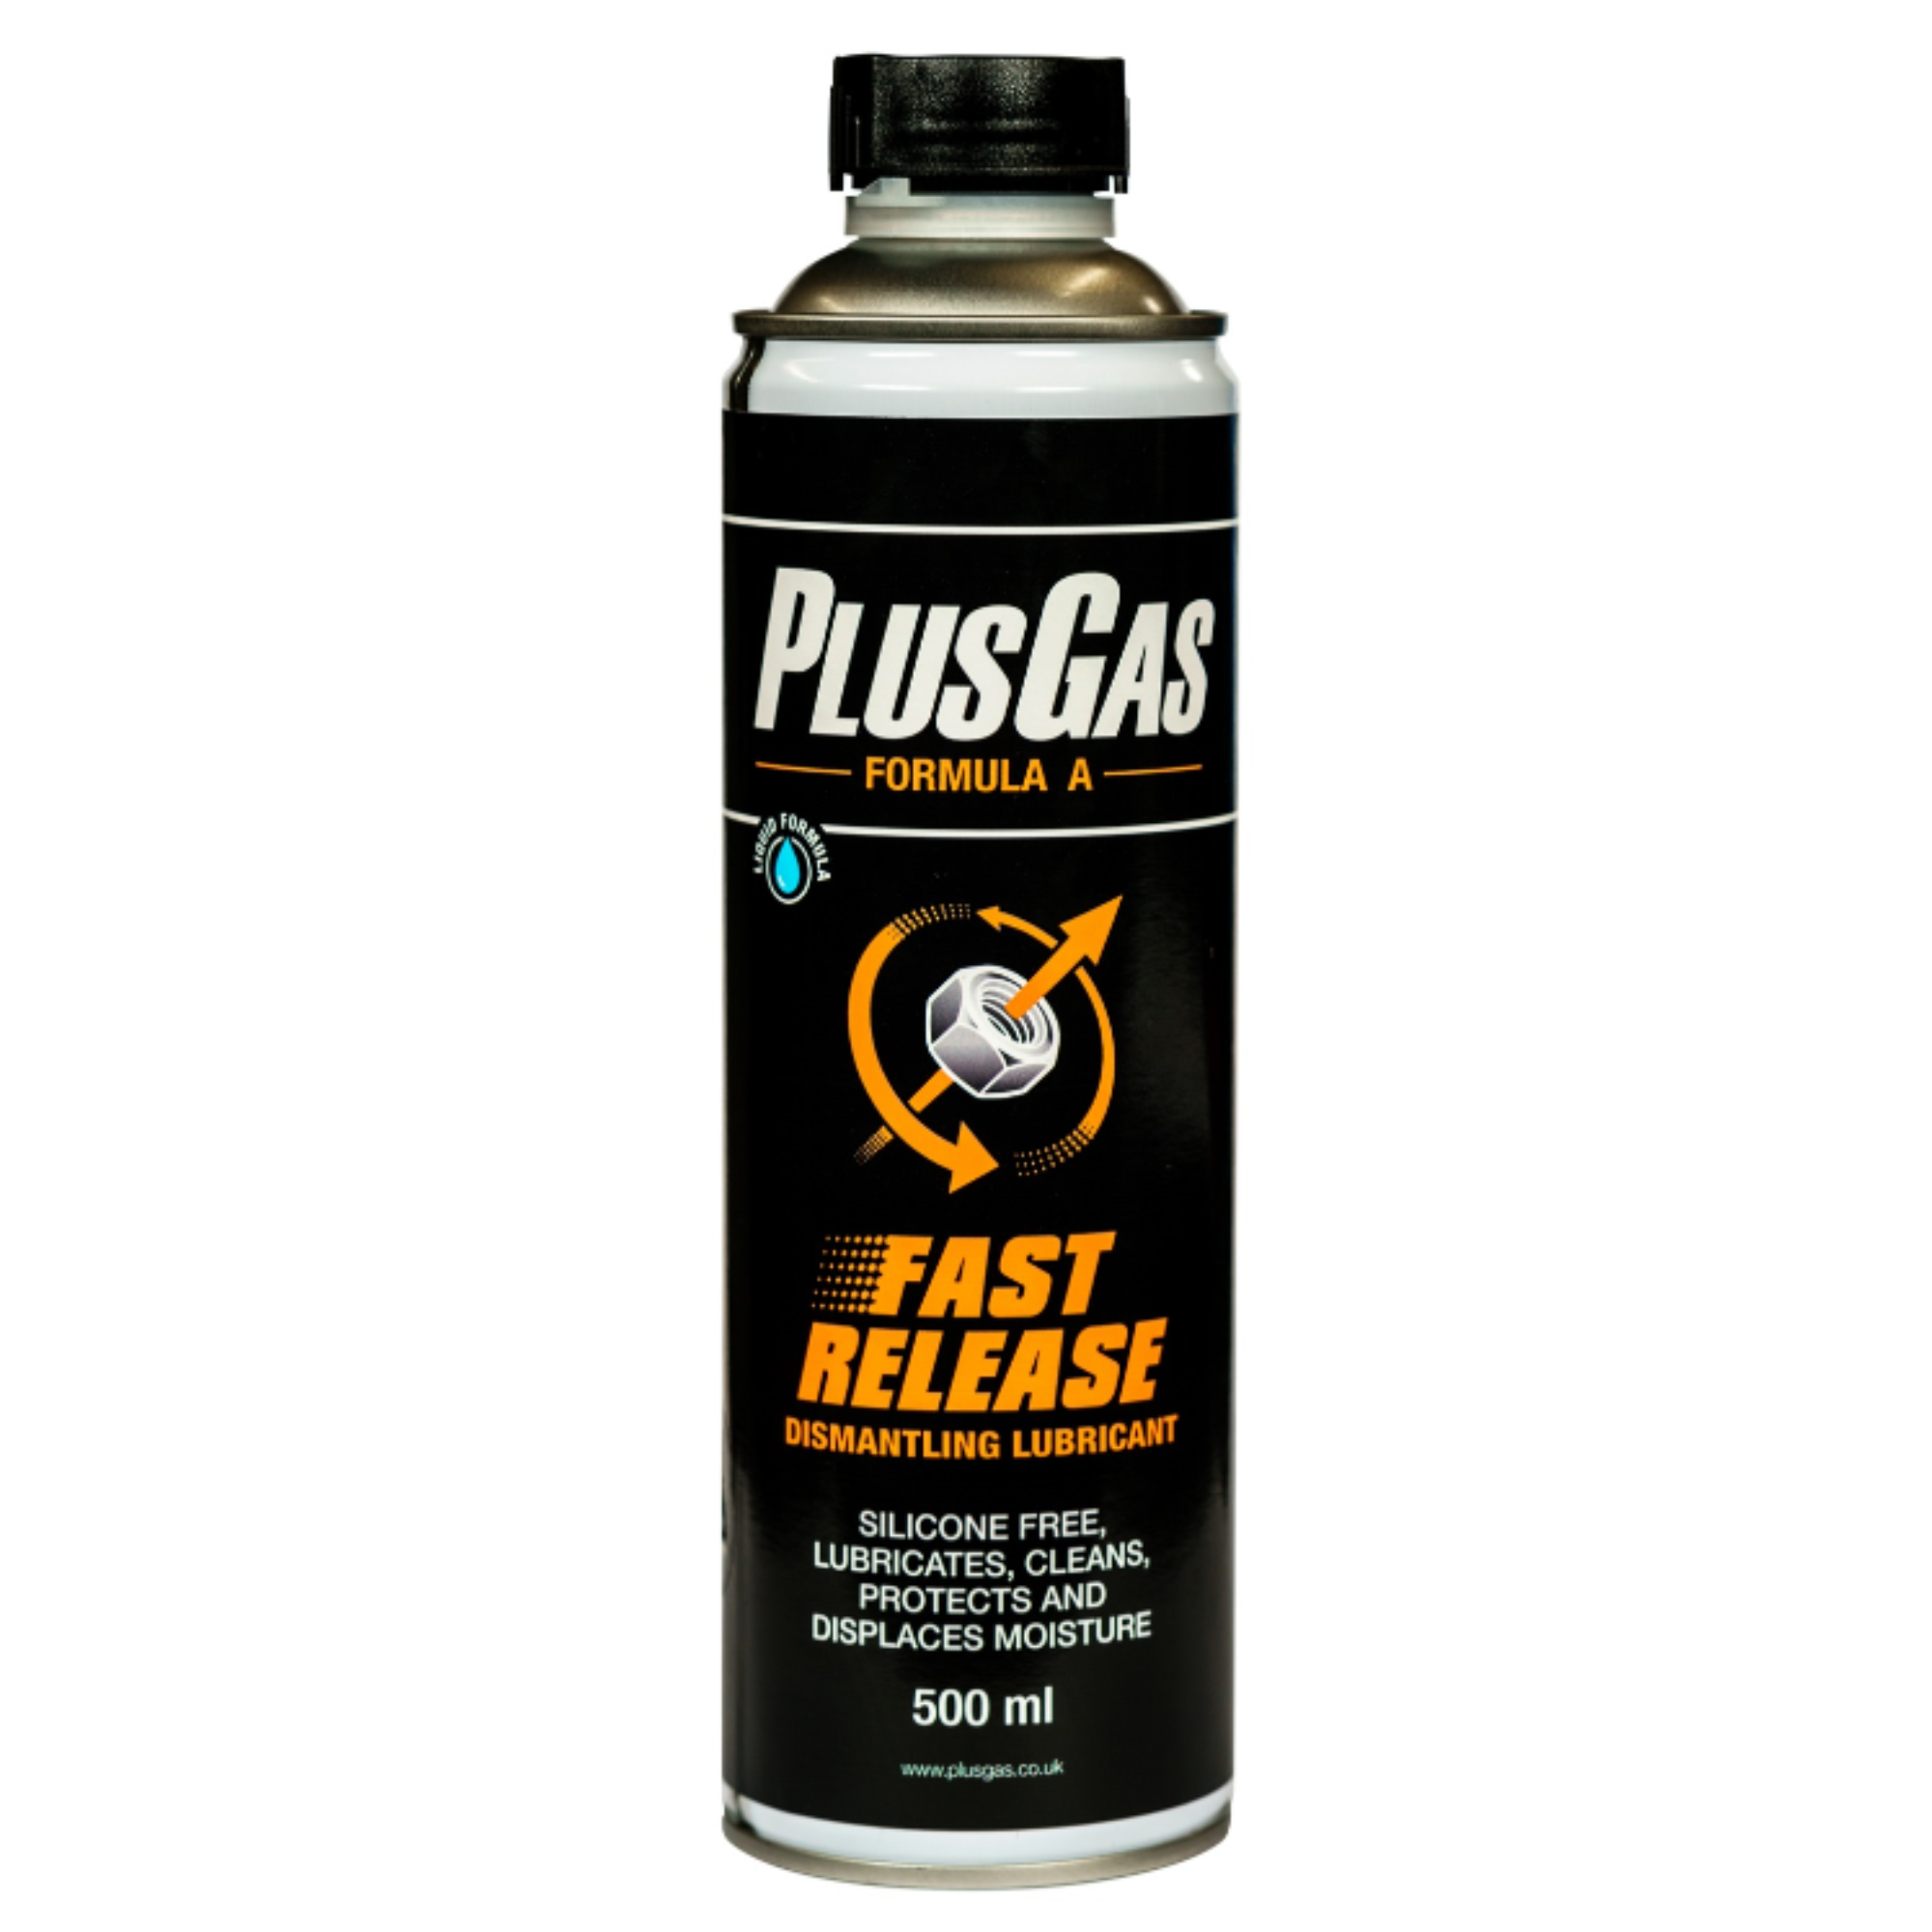 PlusGas FORMULA A Fast Release Dismantling Lubricant Liquid 500ml